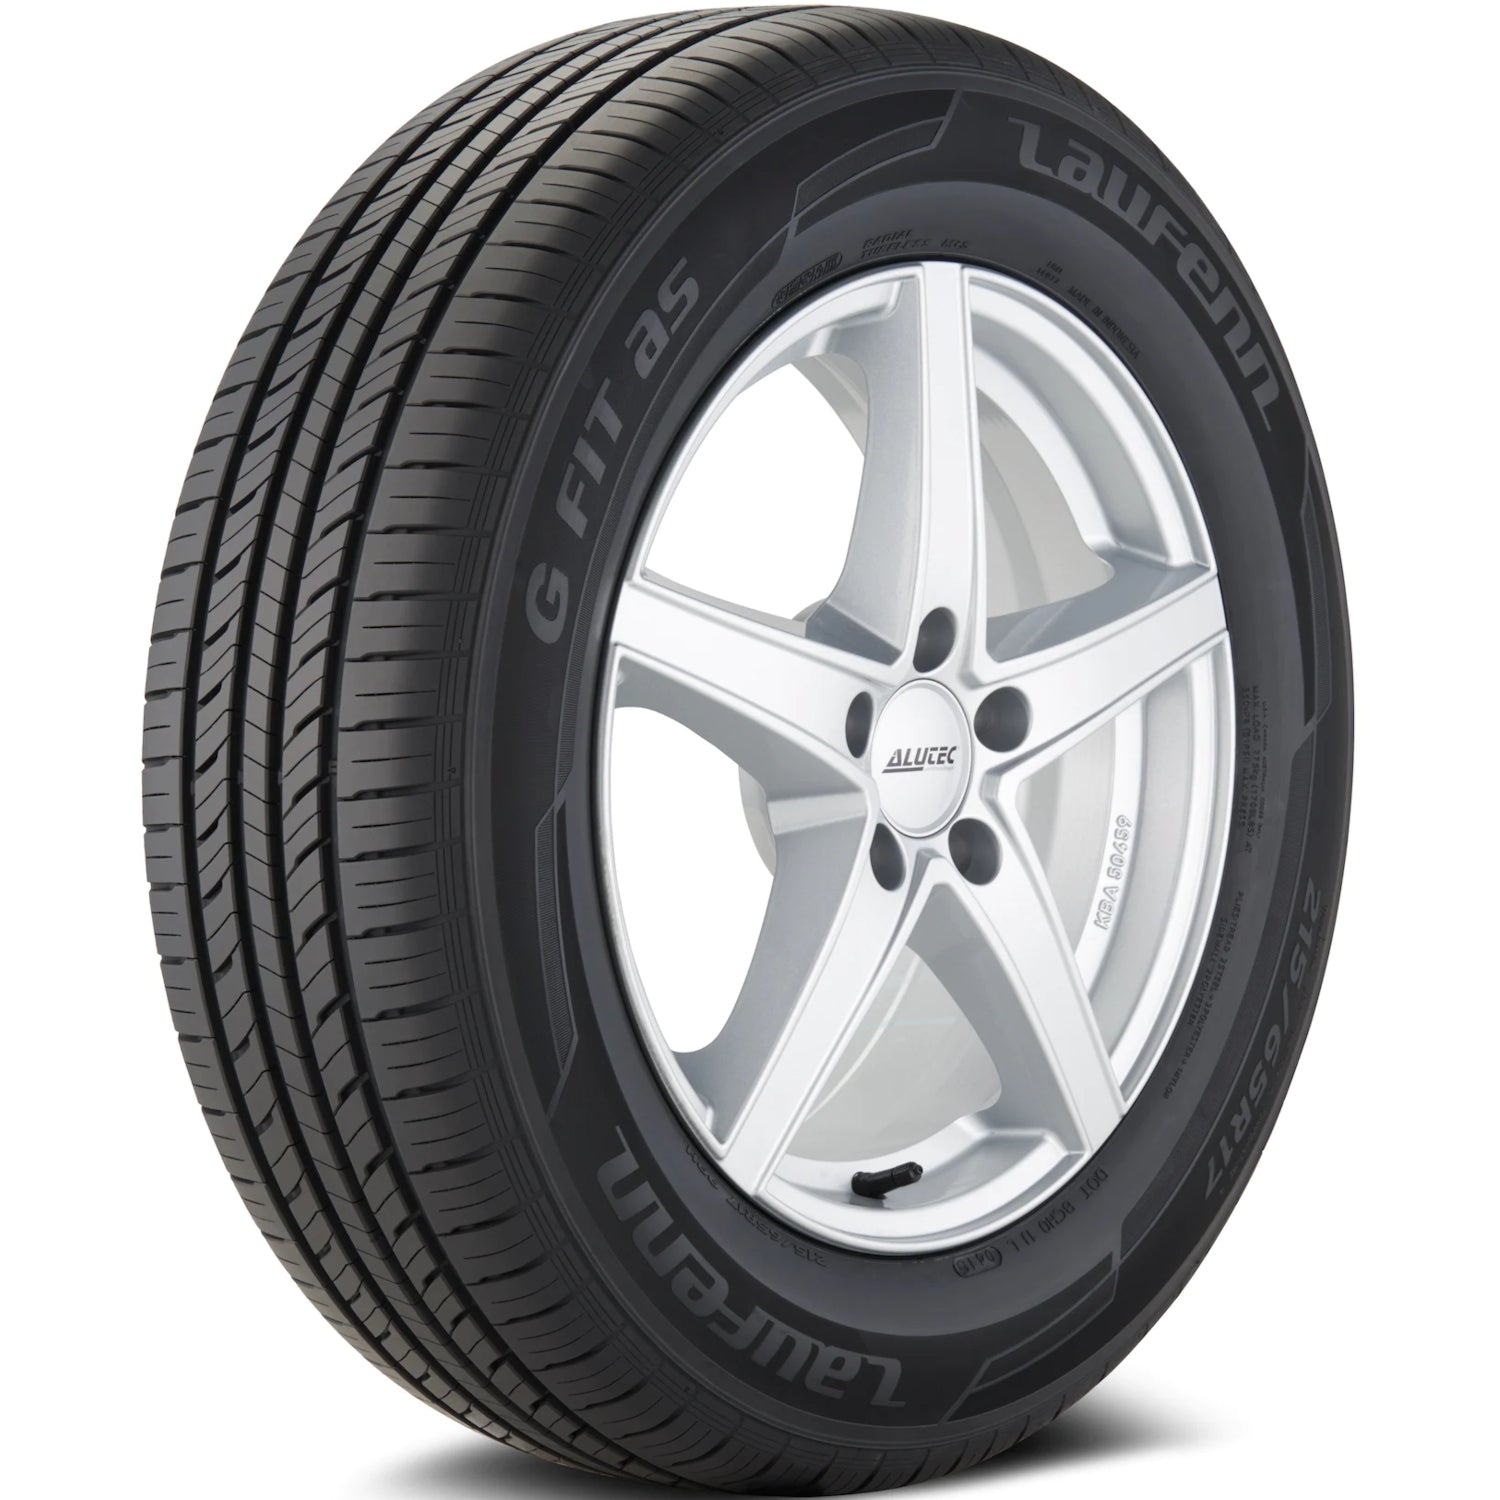 LAUFENN G FIT AS 235/60R16 (27.1X9.3R 16) Tires